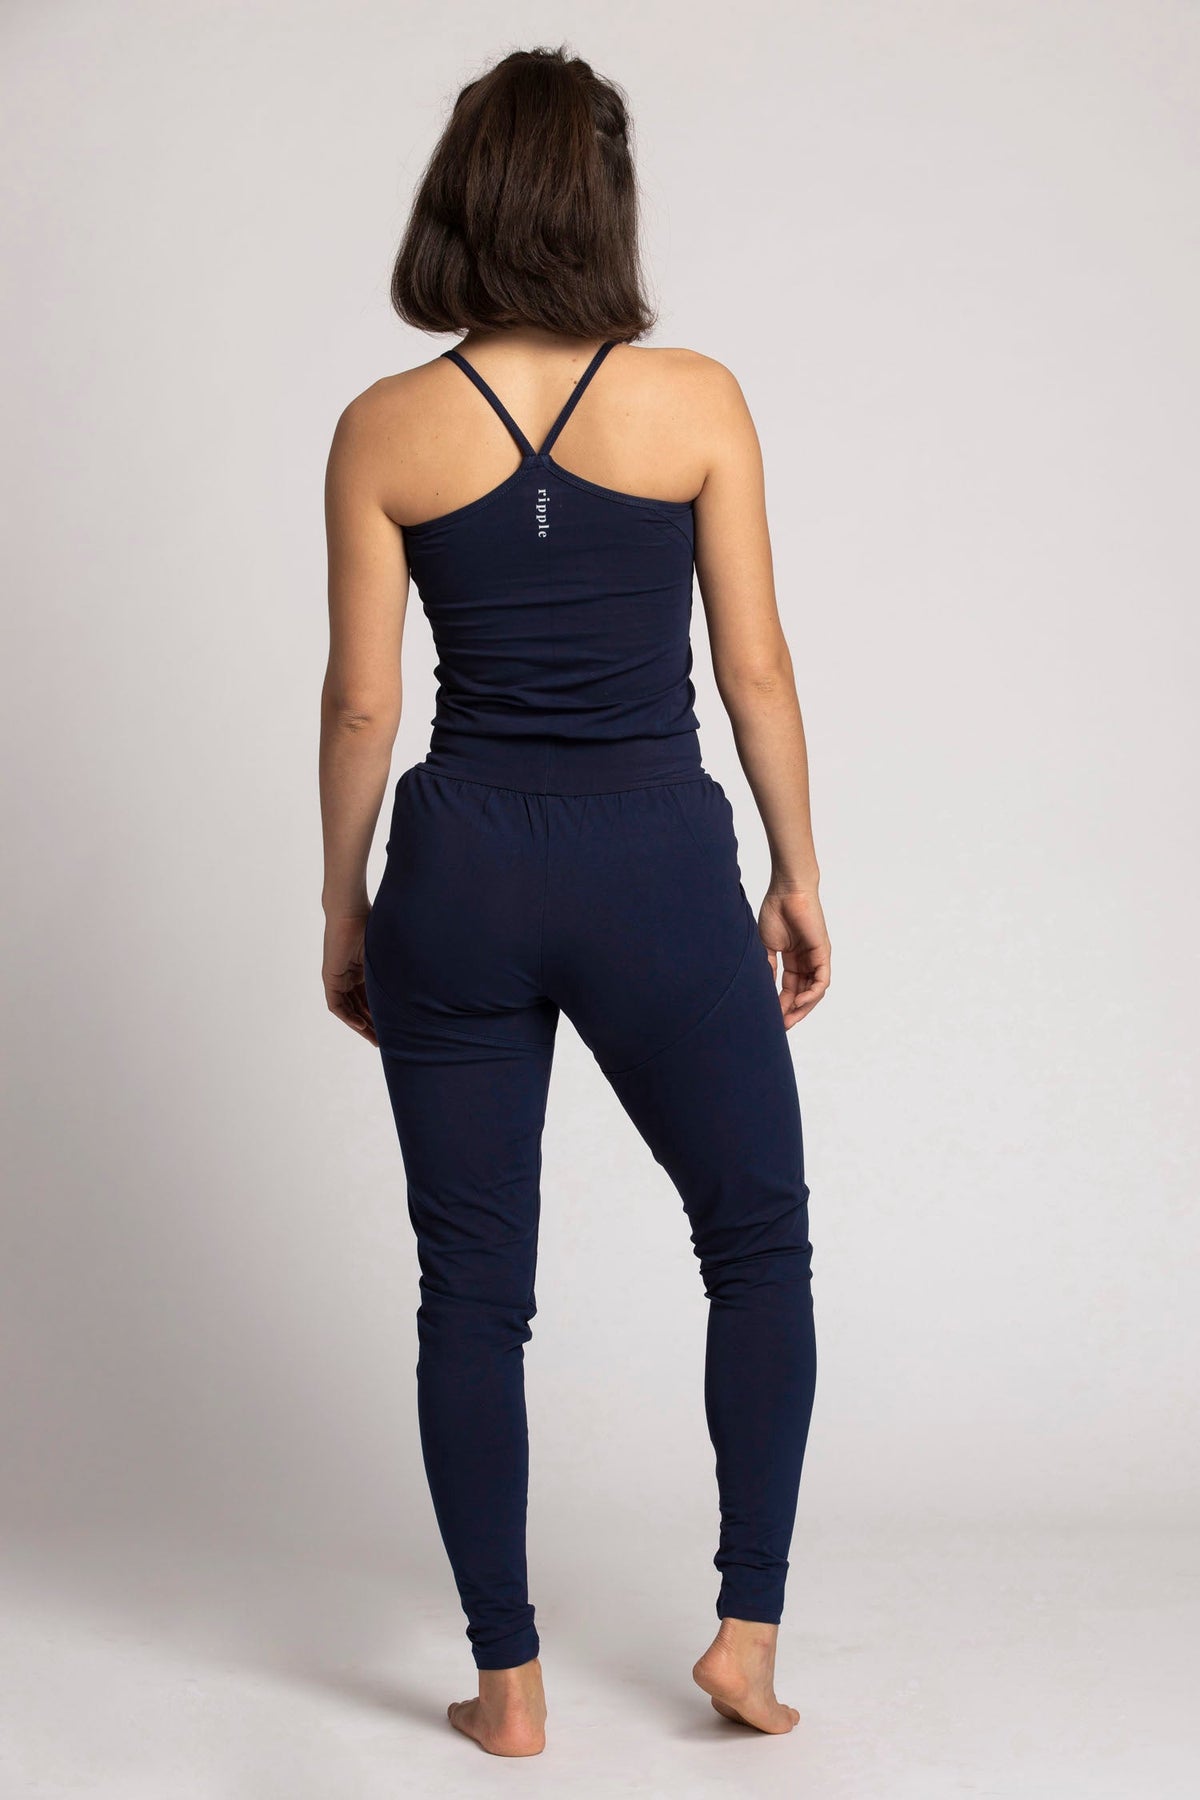 Long Yoga Jumpsuit womens clothing Ripple Yoga Wear 